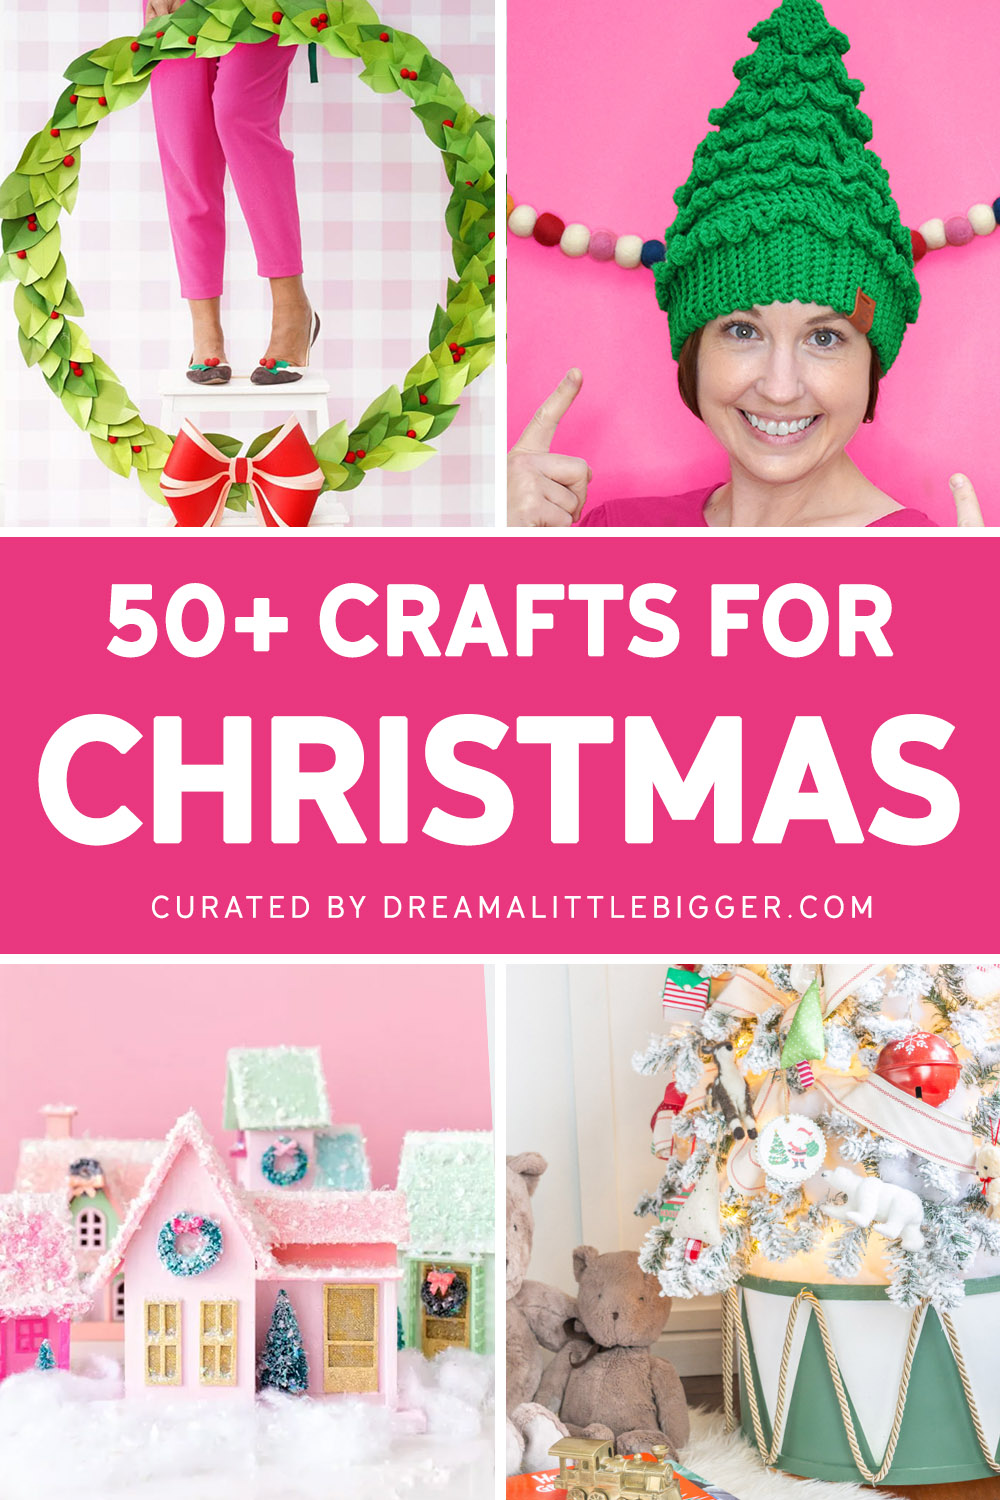 https://www.dreamalittlebigger.com/wp-content/uploads/2022/12/Christmas-crafts-for-adults-dreamalittlebigger-2023-featured.jpg